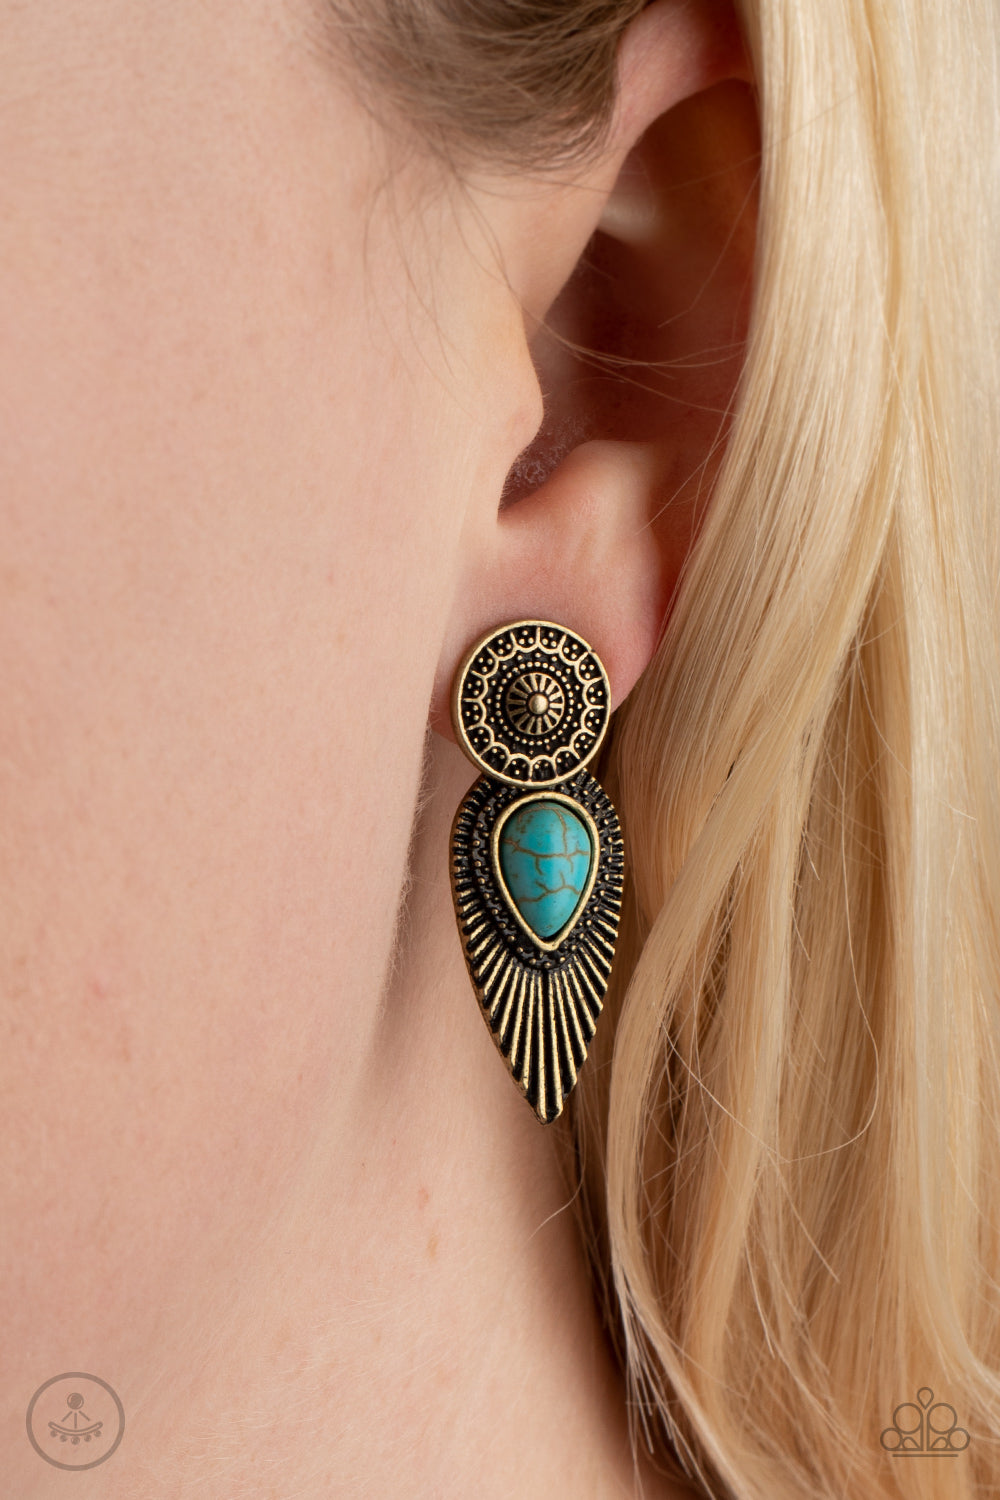 Paparazzi Fly Into the Sun Brass Earrings $5 post style earring online #P5PO-BRBL-041XX